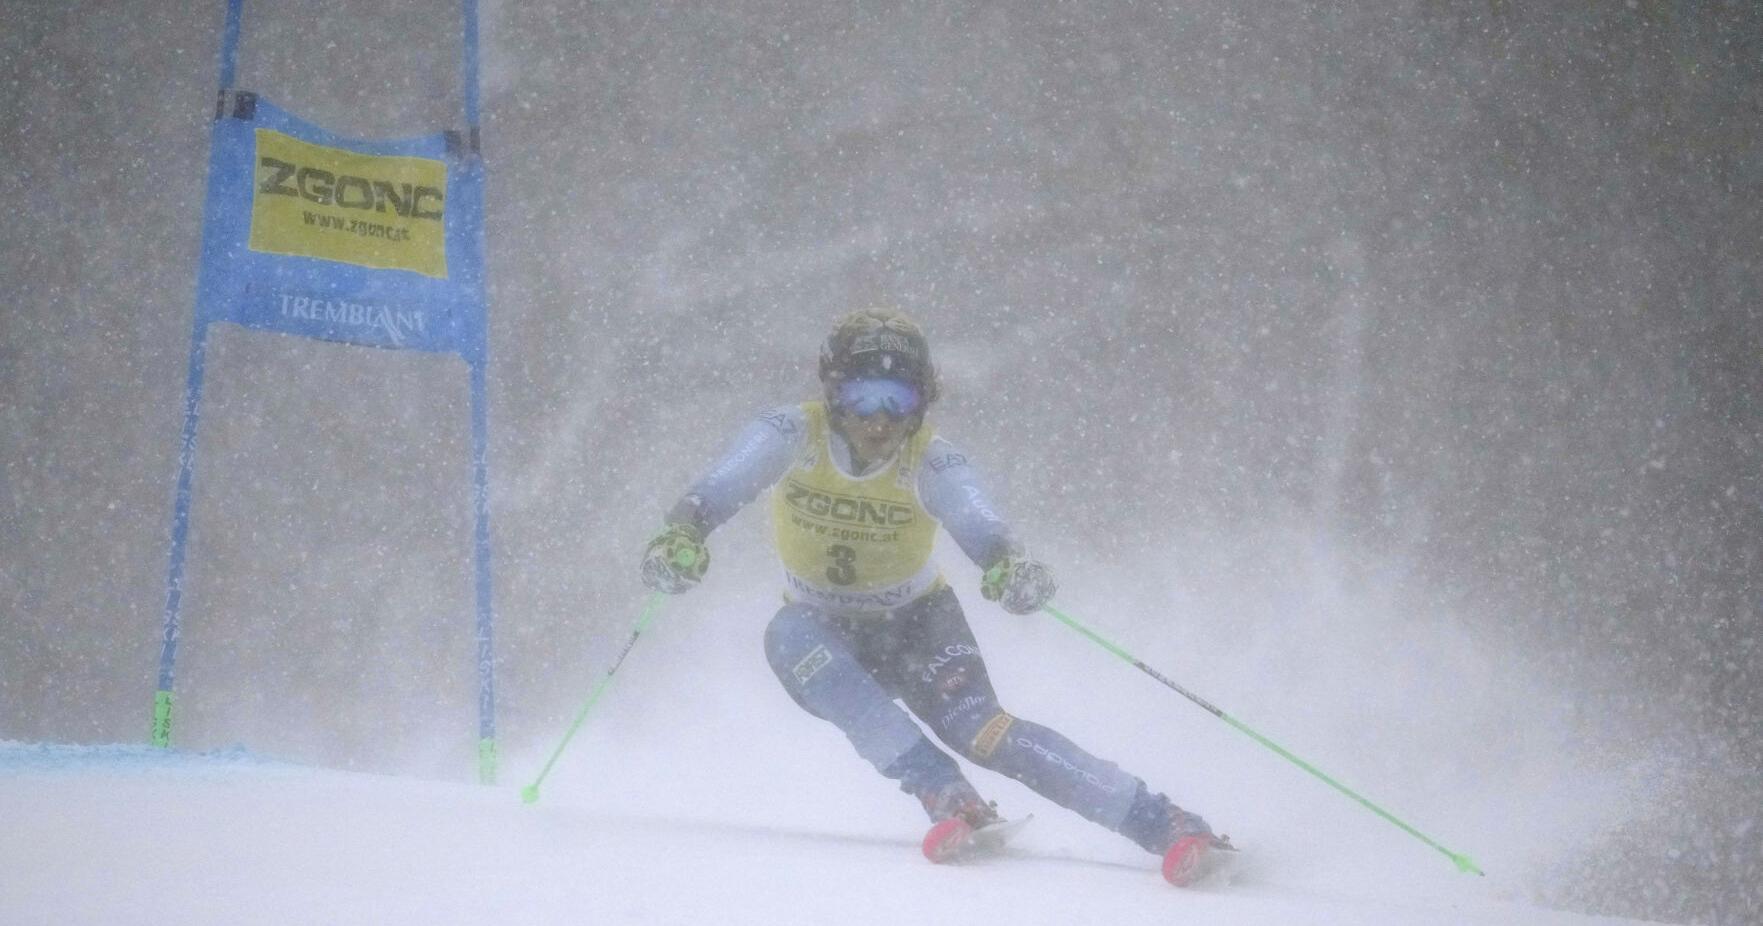 Brignone wins a second consecutive World Cup giant slalom